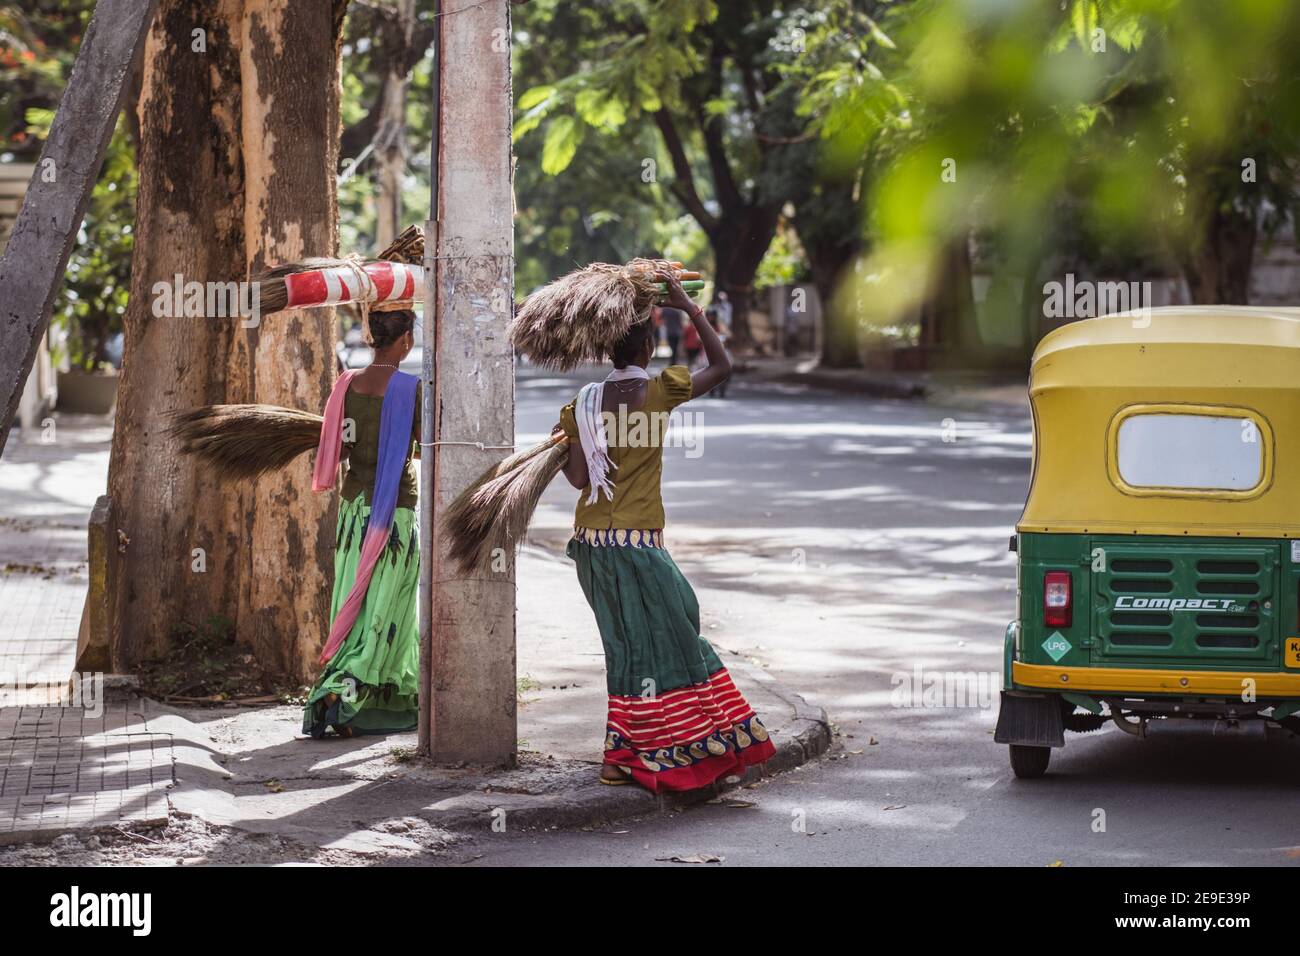 Bengaluru, India - June 08, 2020. Indian women in colorful sarees carrying a bundle on her head. India, Bengaluru Stock Photo